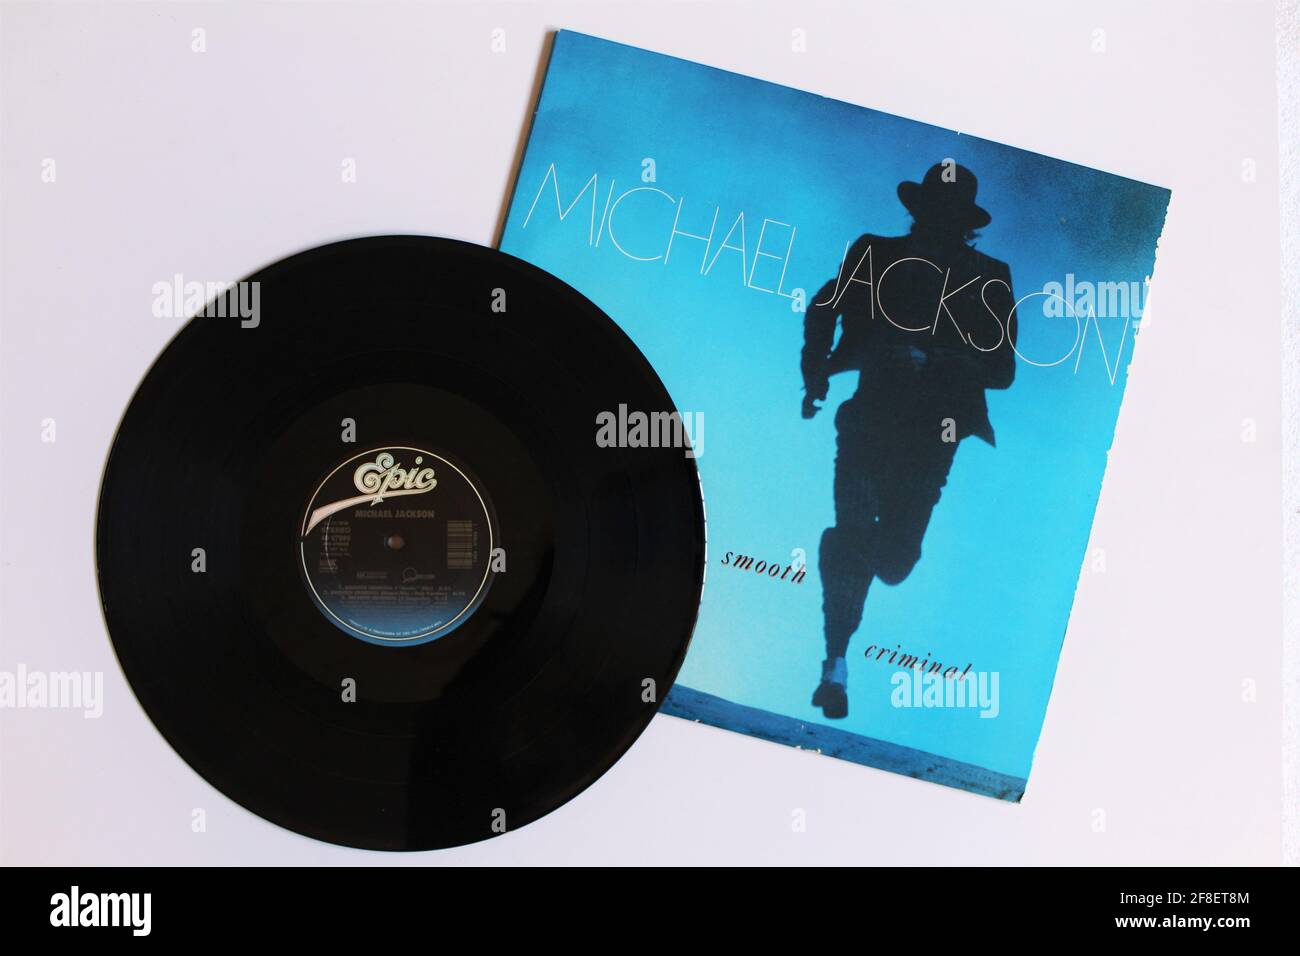 https://c8.alamy.com/comp/2F8ET8M/pop-disco-rock-and-funk-artist-michael-jackson-music-album-on-vinyl-record-lp-disc-titled-smooth-criminal-album-cover-2F8ET8M.jpg